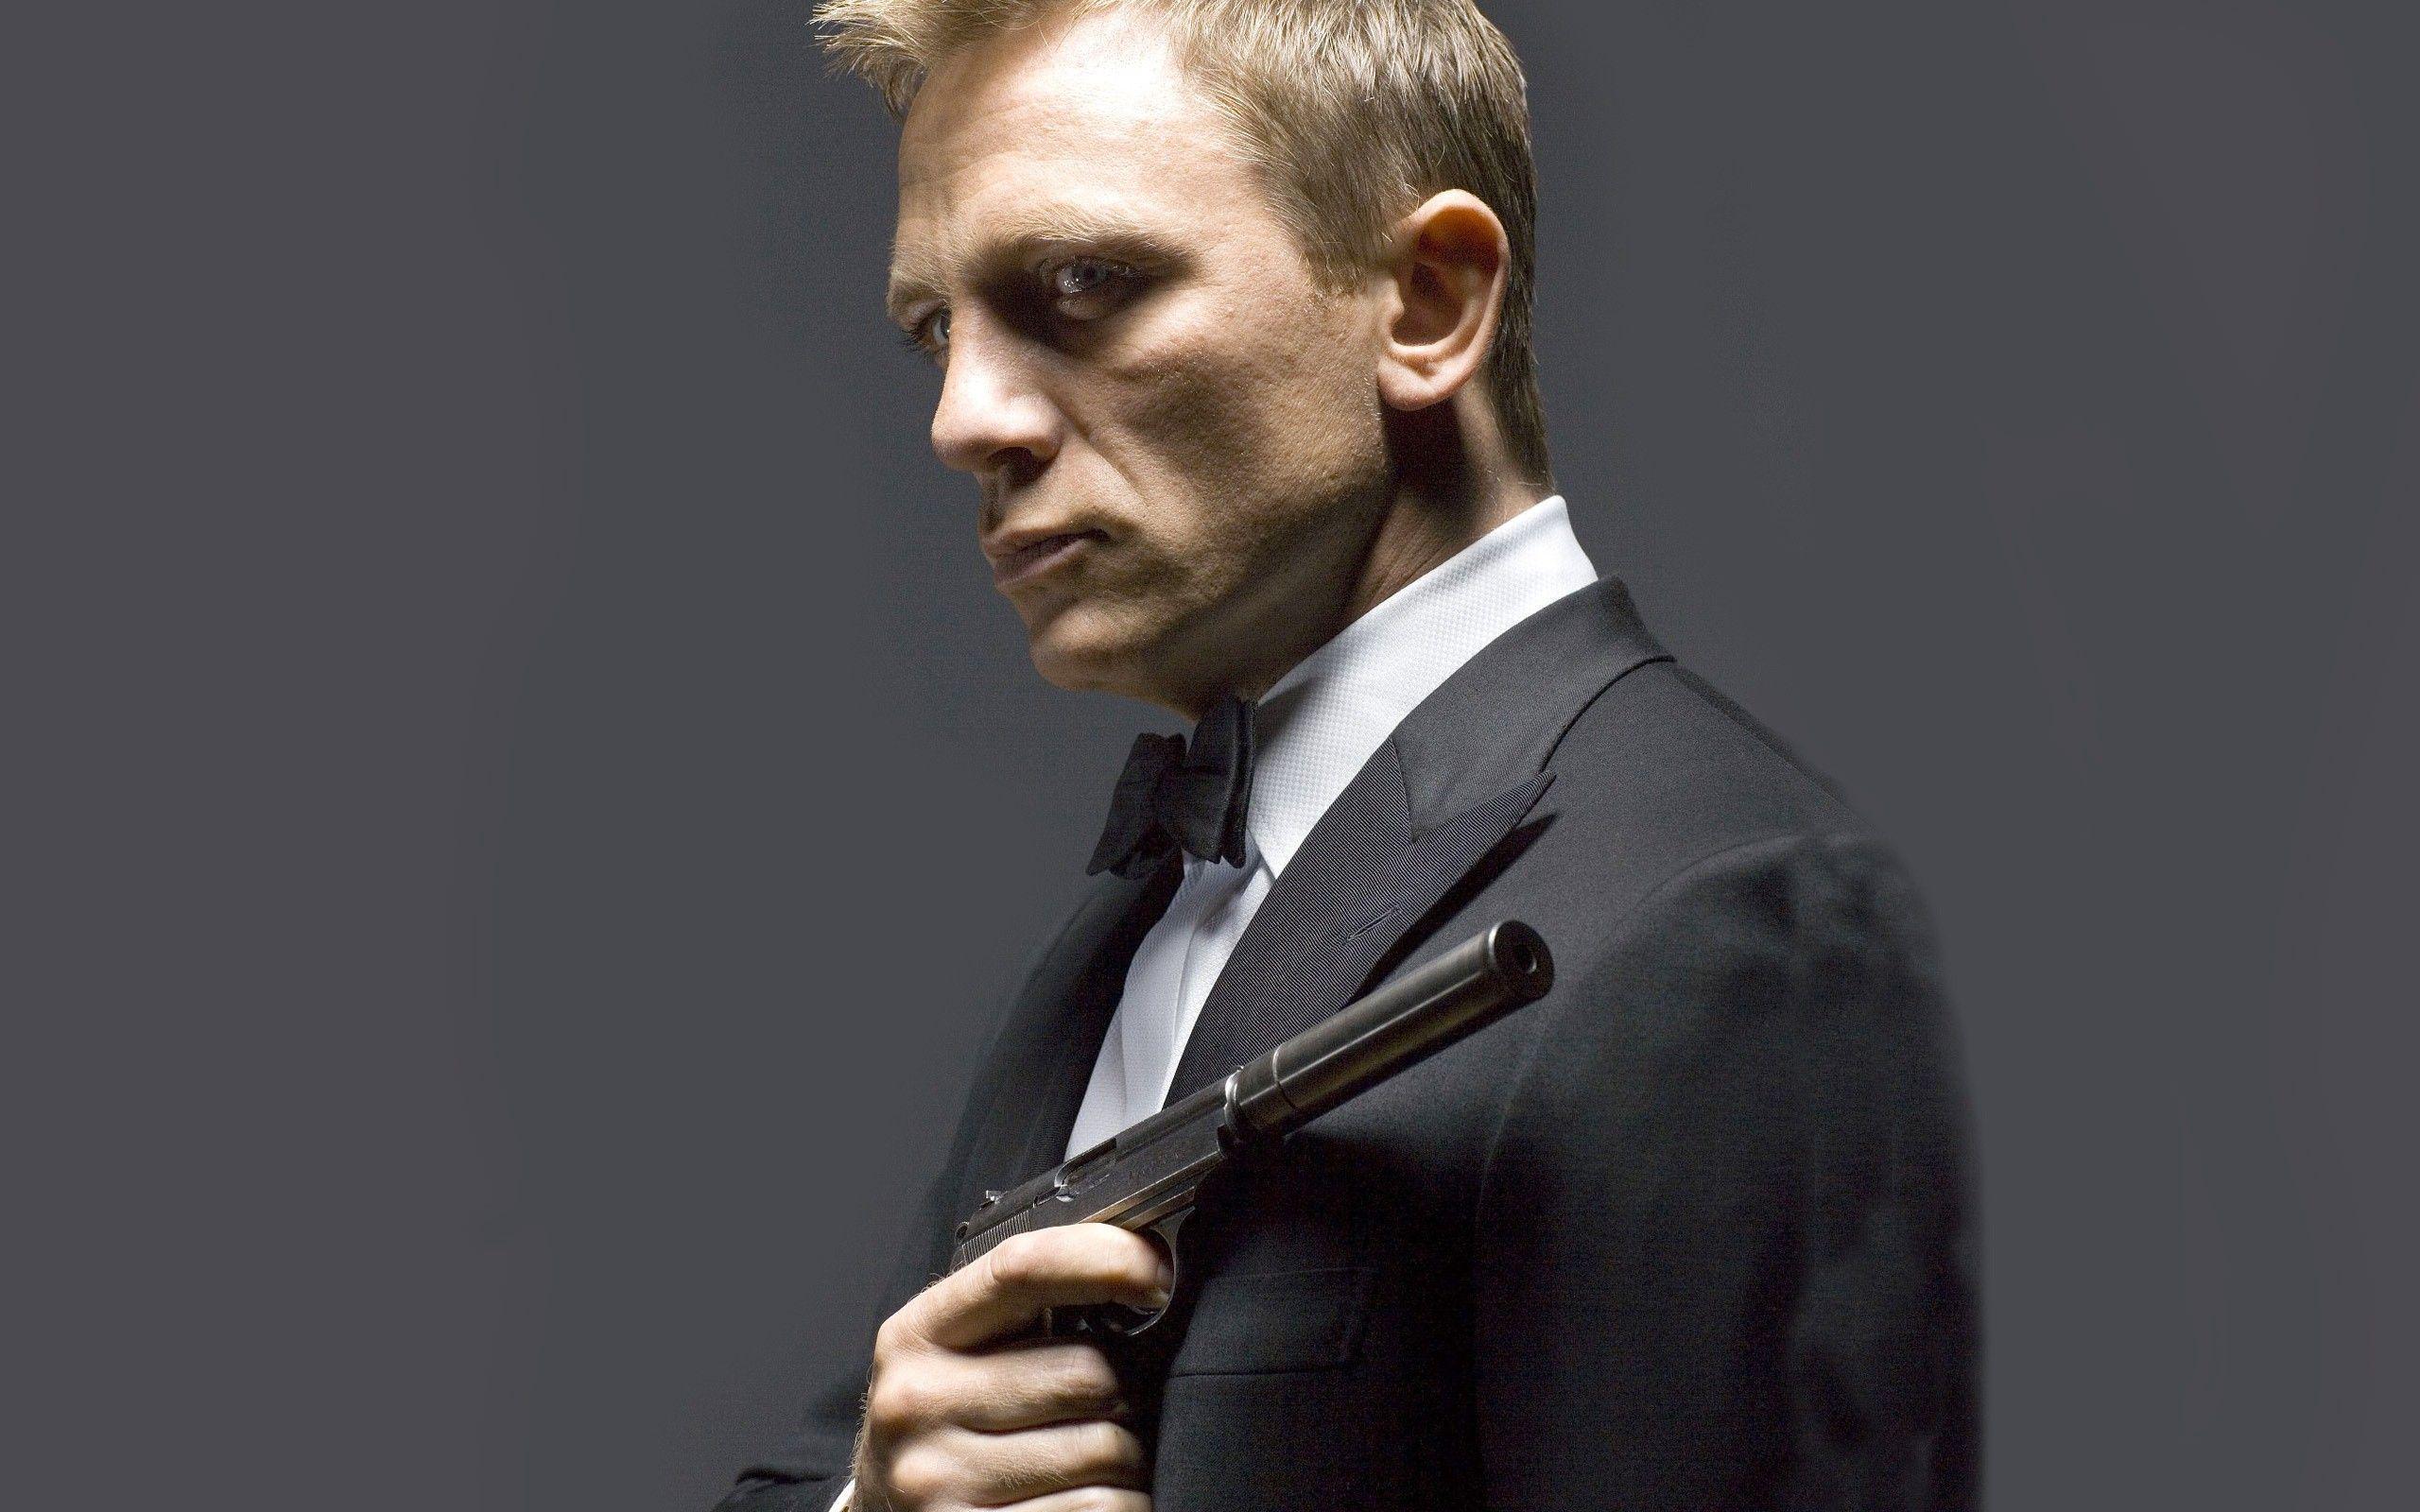 Daniel Craig Wallpaper Free Download HD Hollywood Celebrities Image